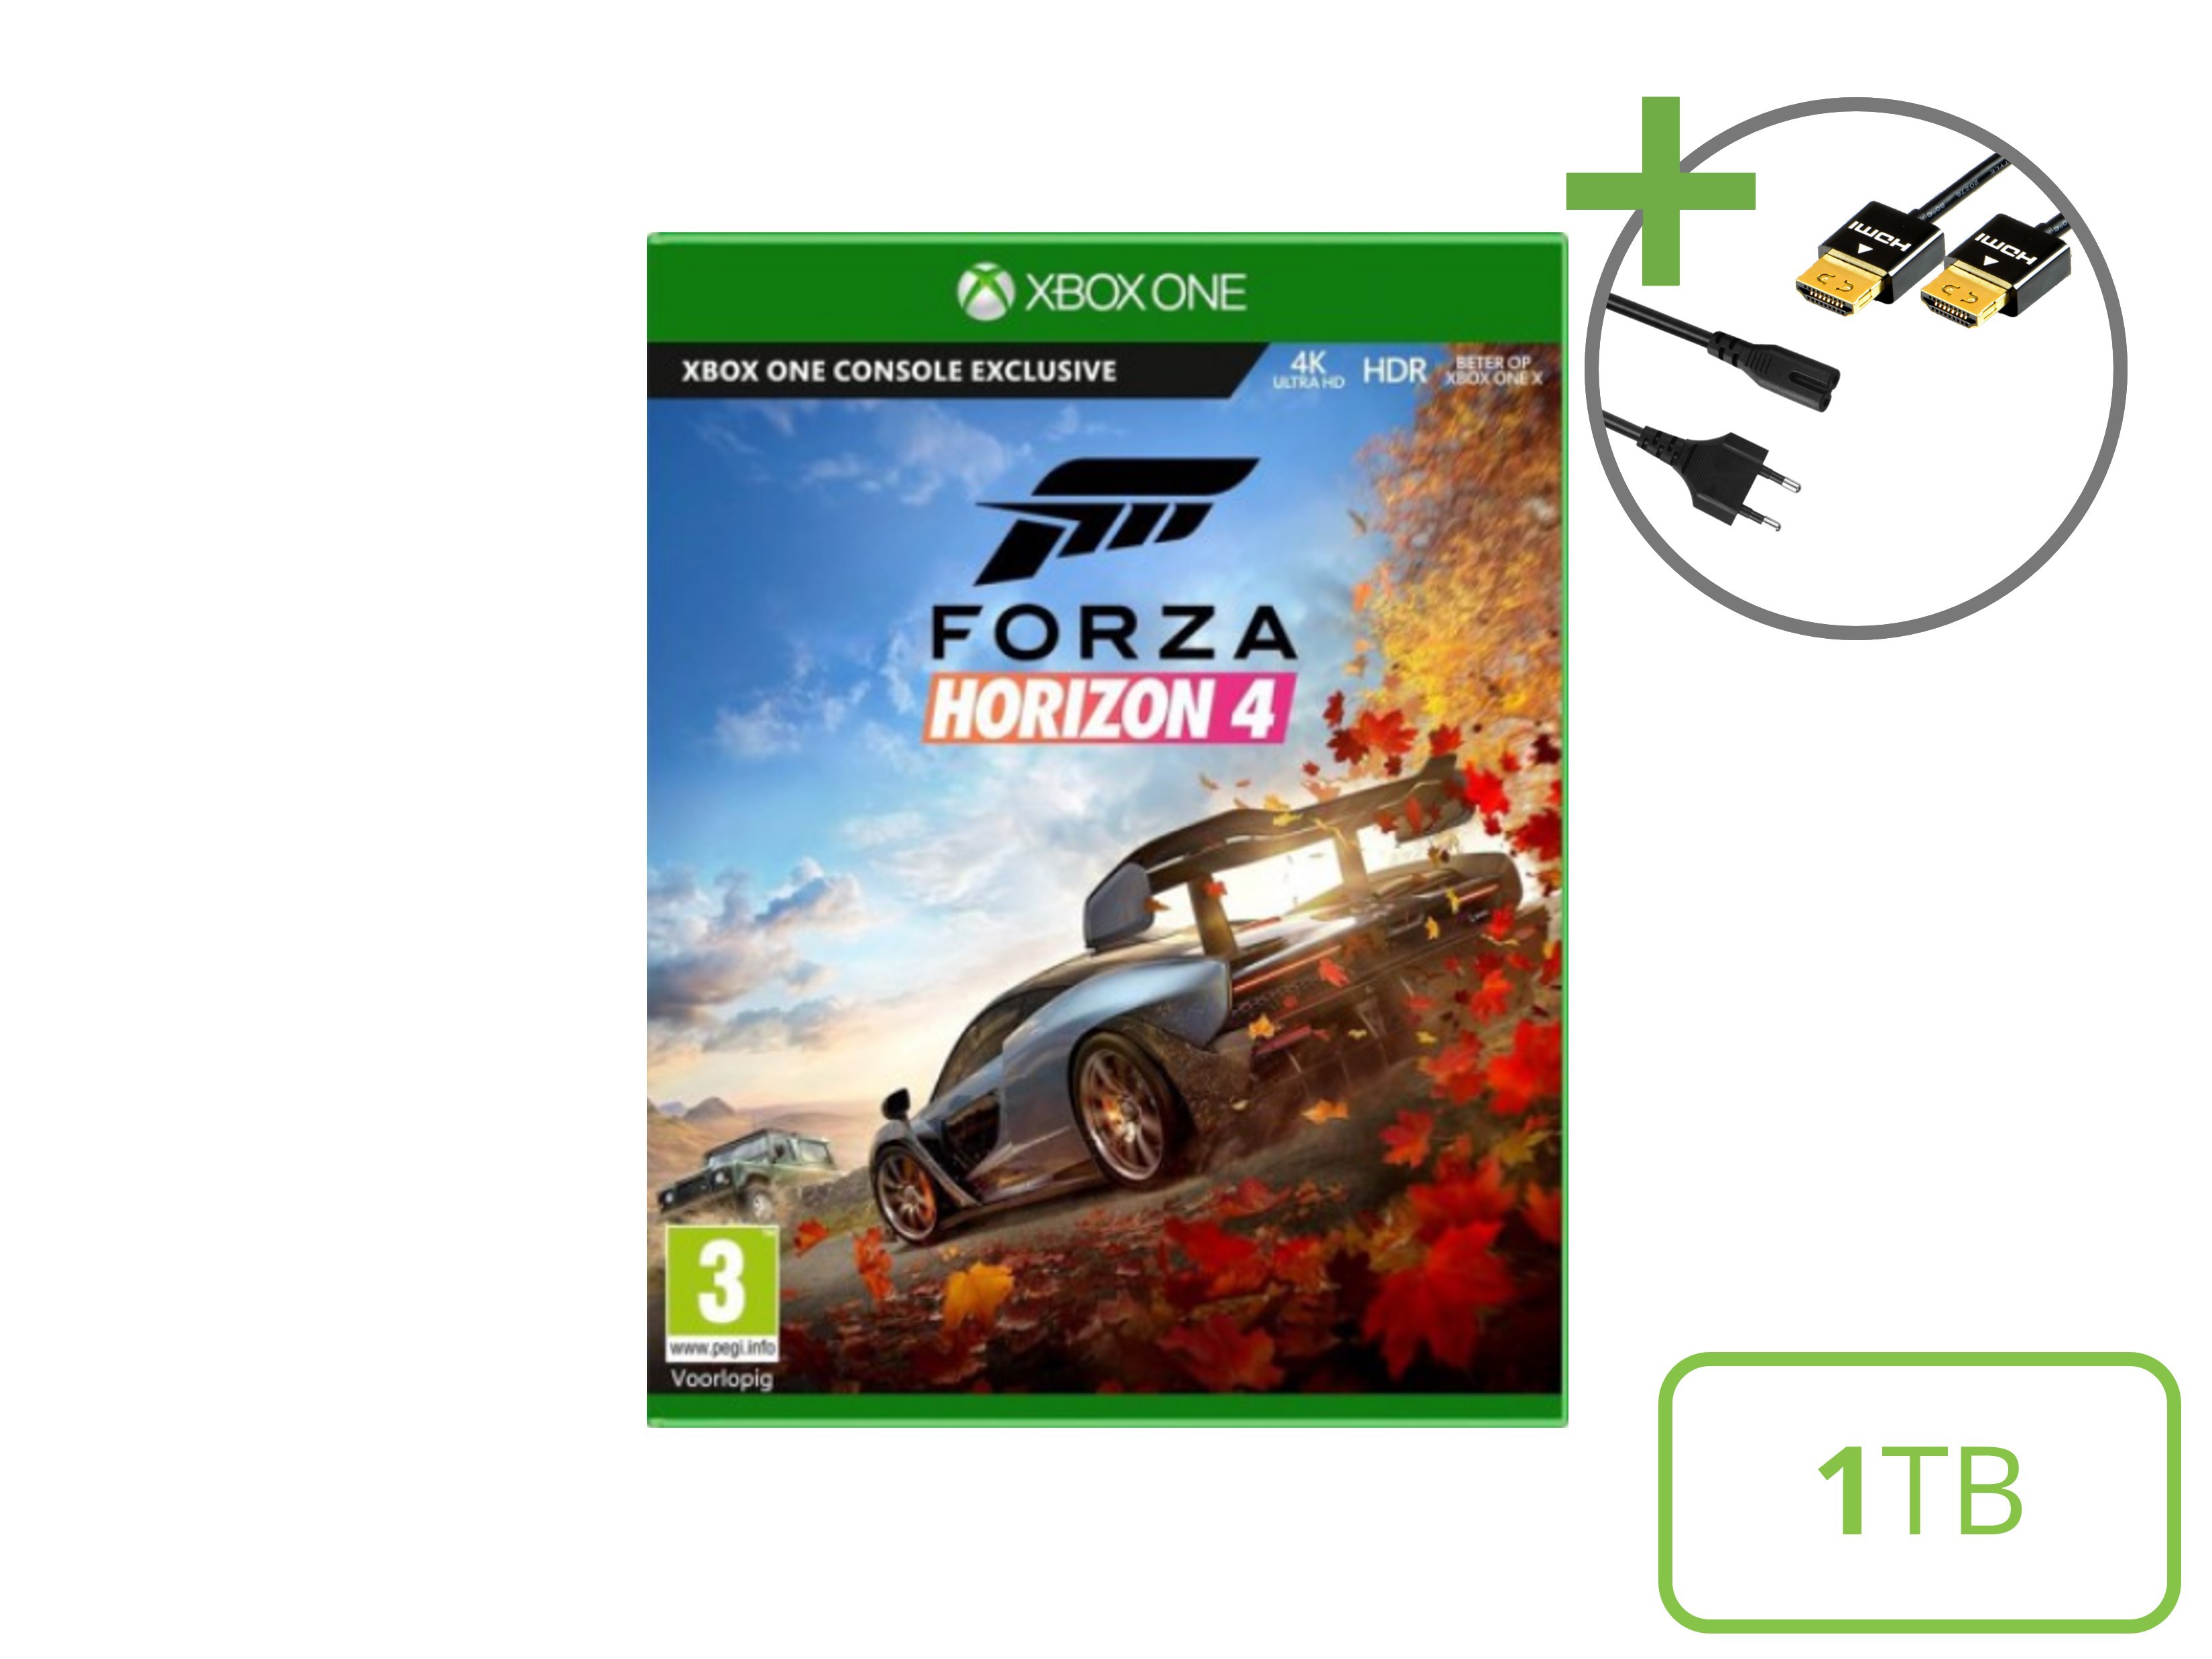 Microsoft Xbox One S Starter Pack - 1TB Forza Horizon 4  Edition - Xbox One Hardware - 4